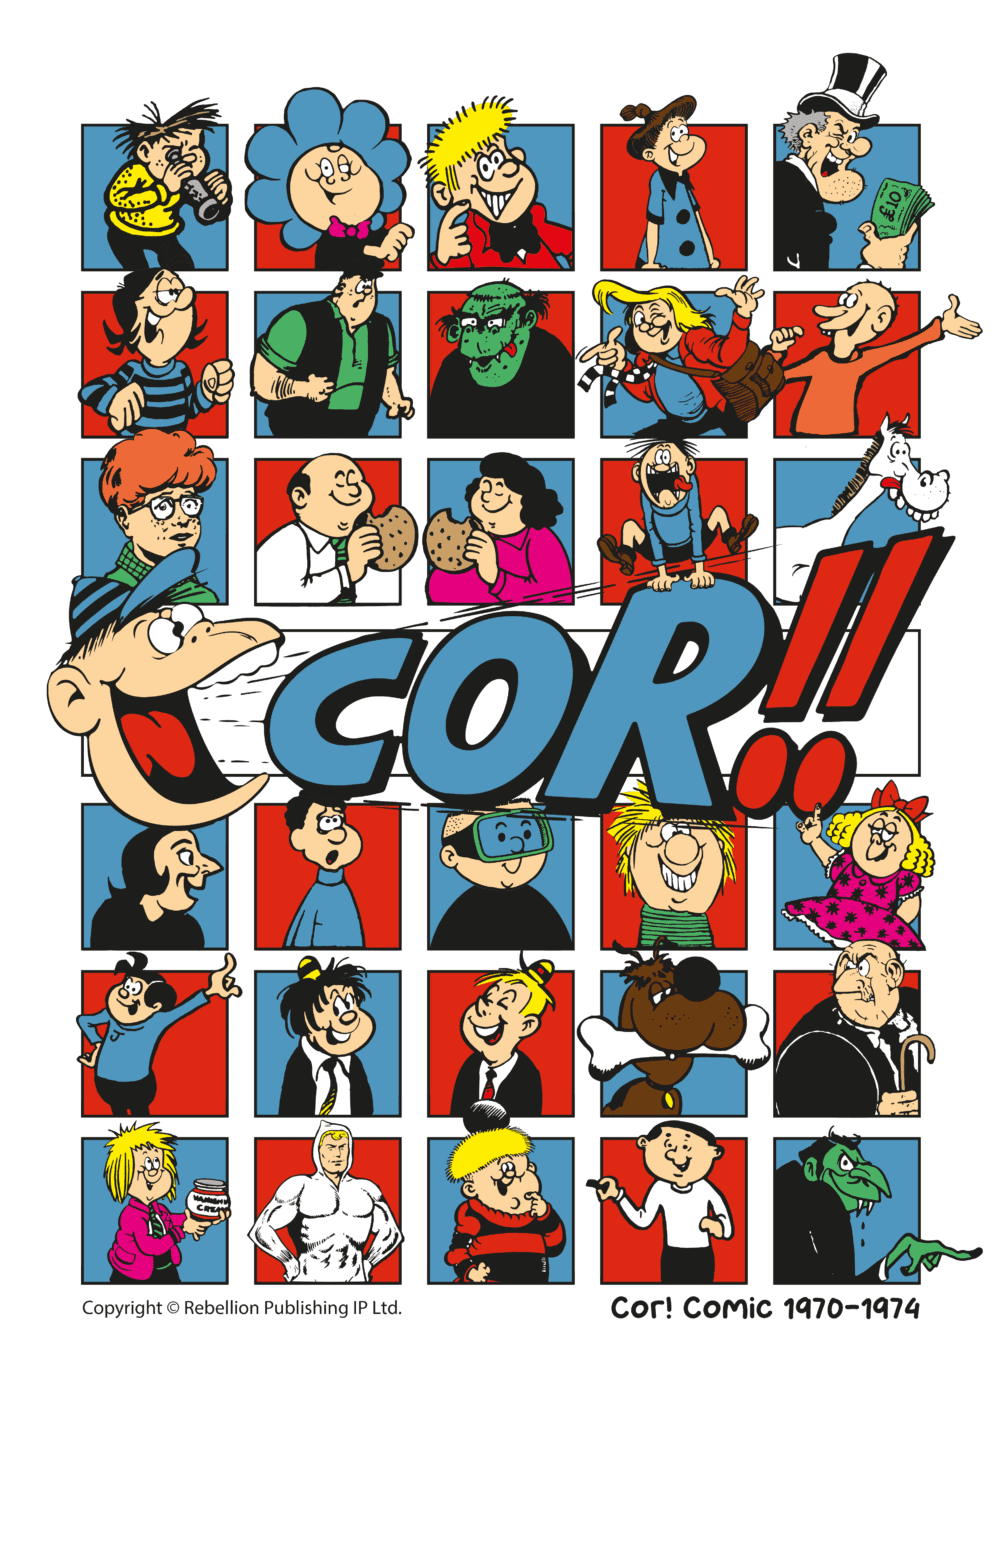 Cor!! Comic Characters